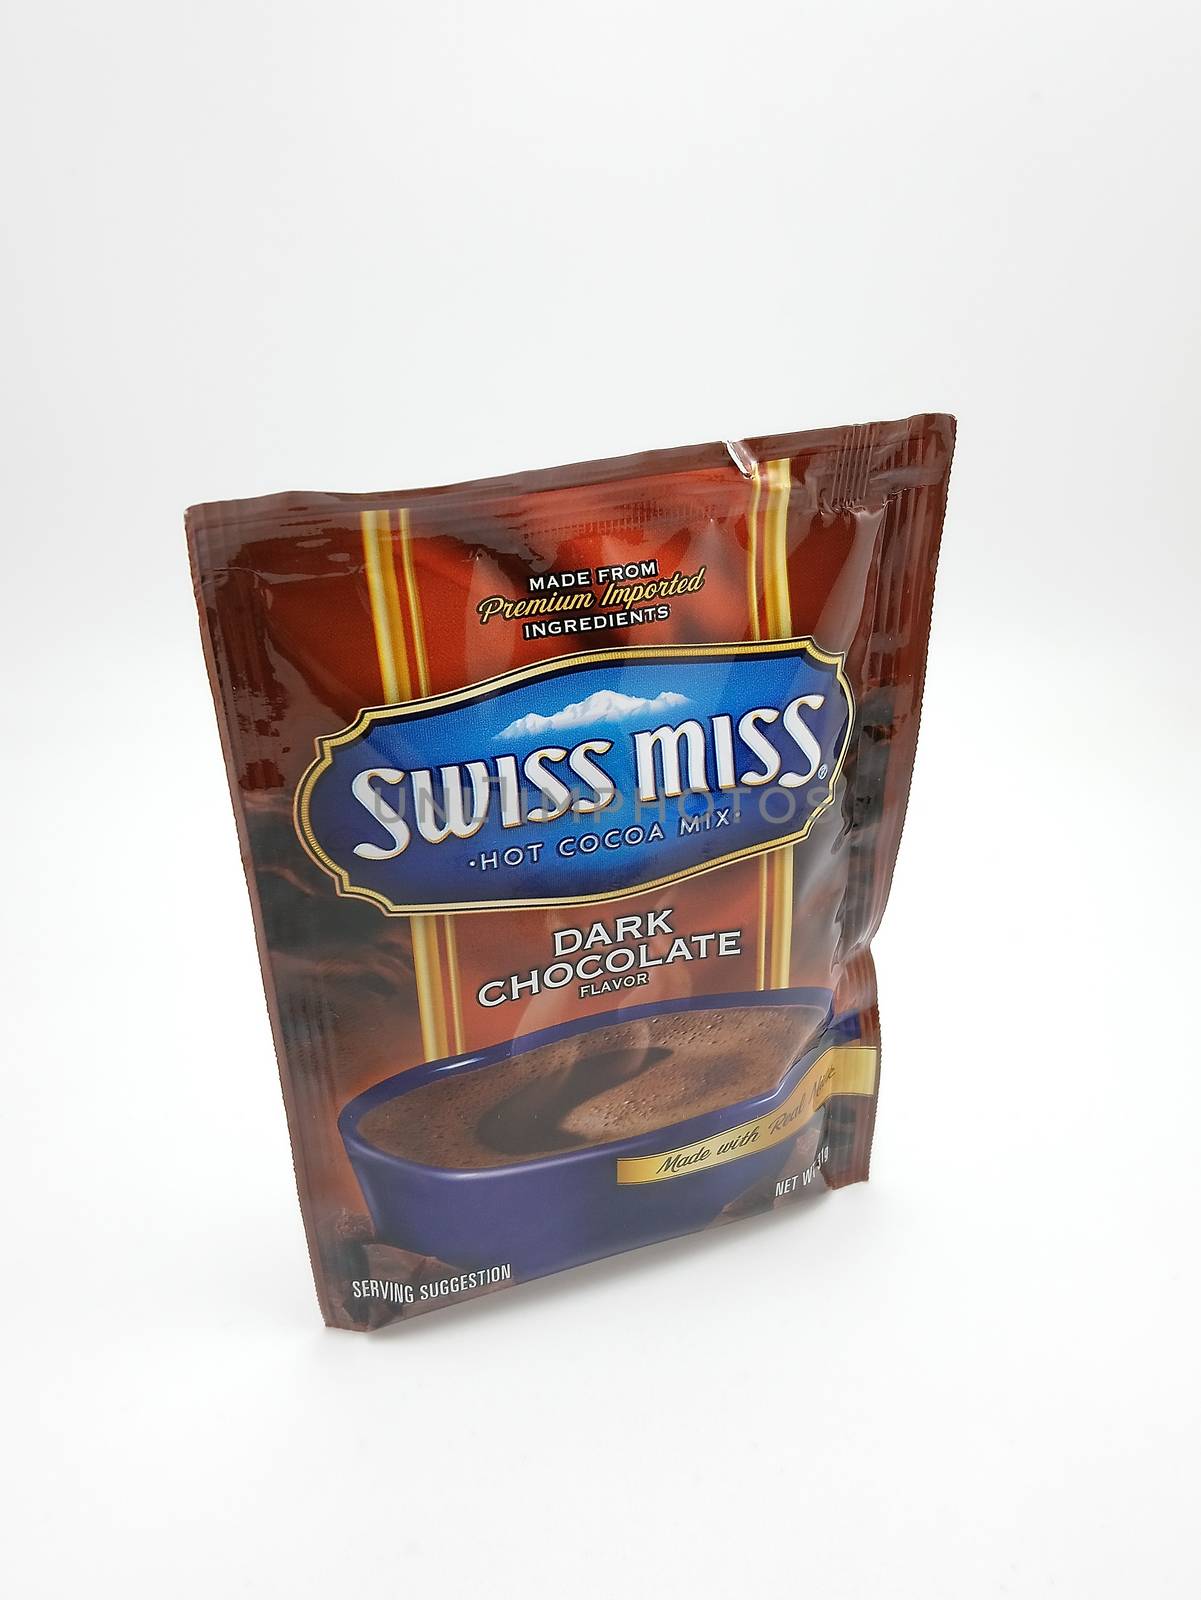 Swiss miss hot cocoa drink dark chocolate in Manila, Philippines by imwaltersy